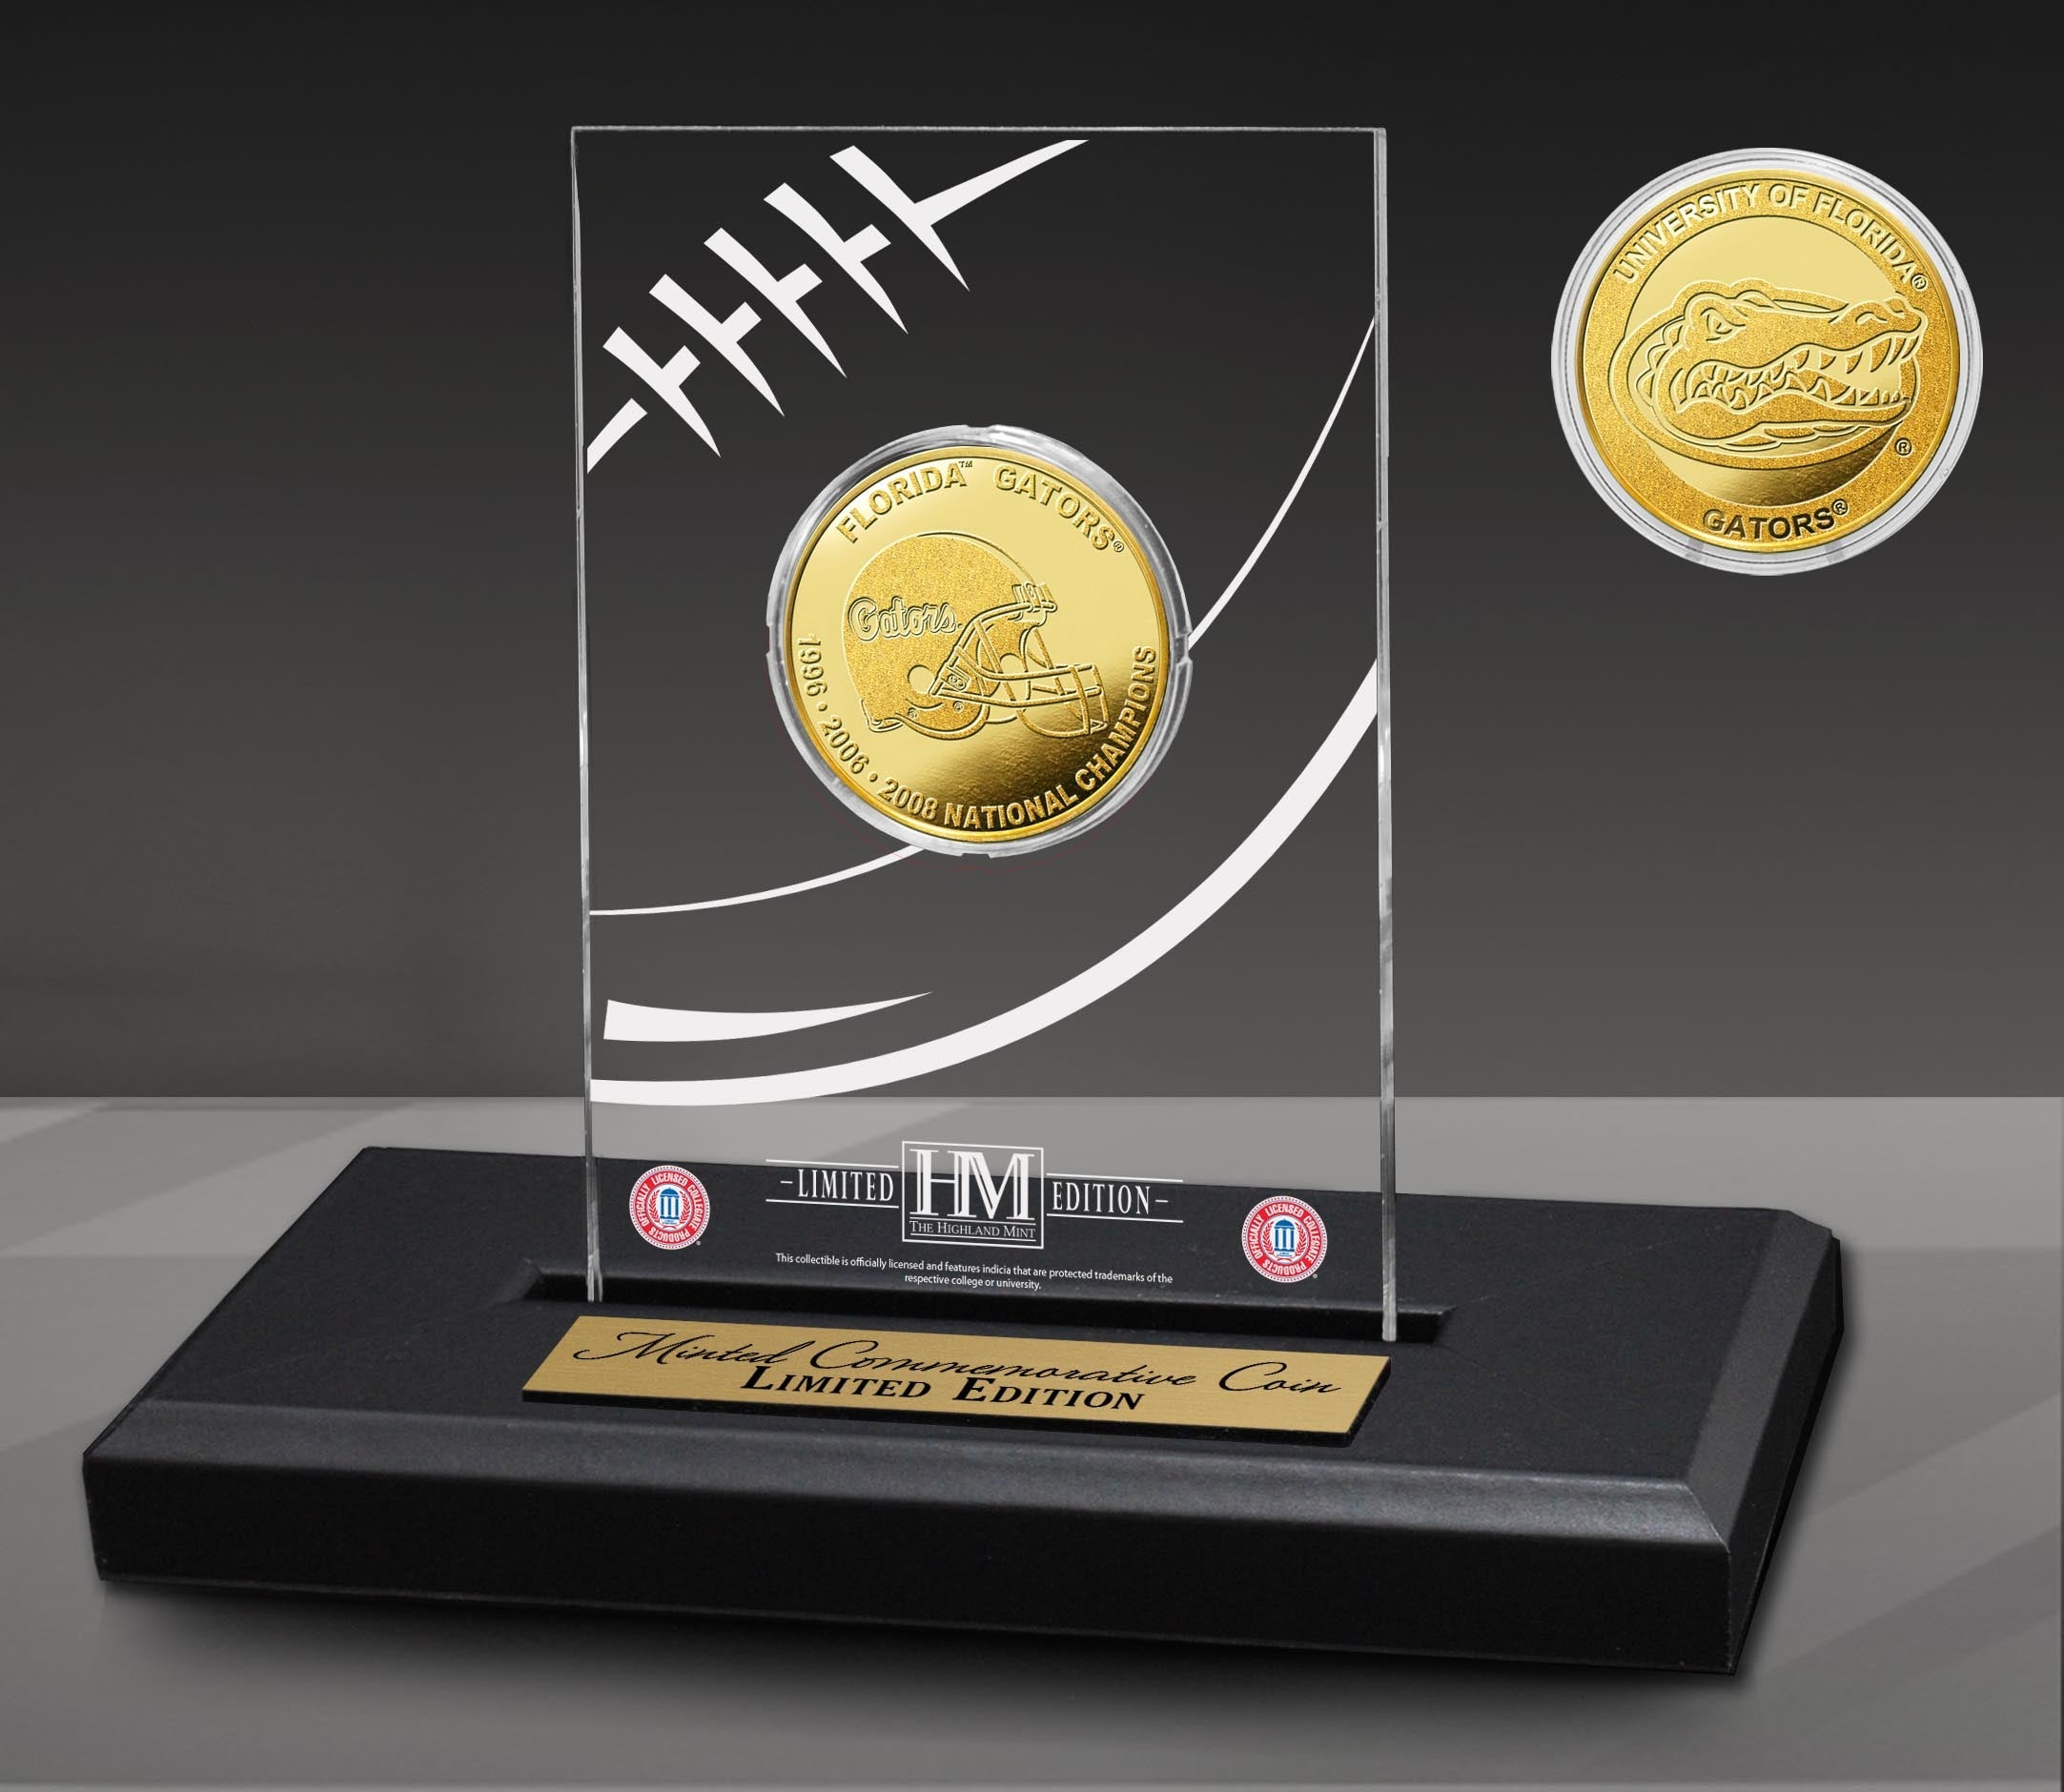 University of Florida Gators 3-Time National Champions Gold Coin in AcrylicÃƒâ€šÃ‚Â Display